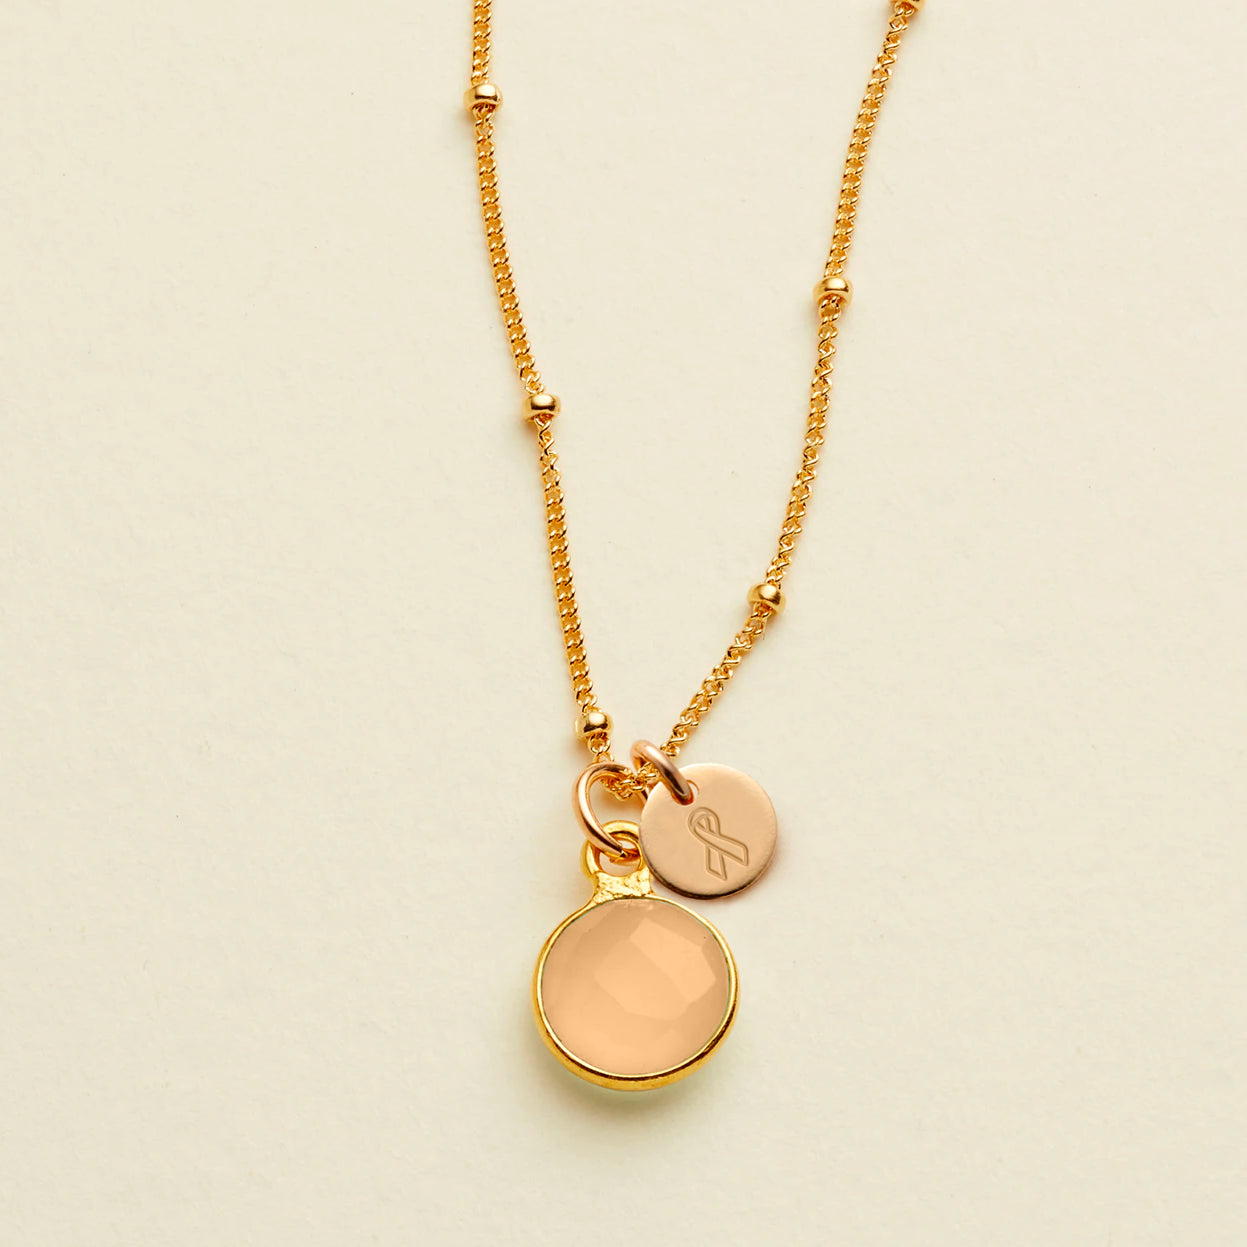 Cancer Awareness Necklace Gold Filled / Uterine Necklace